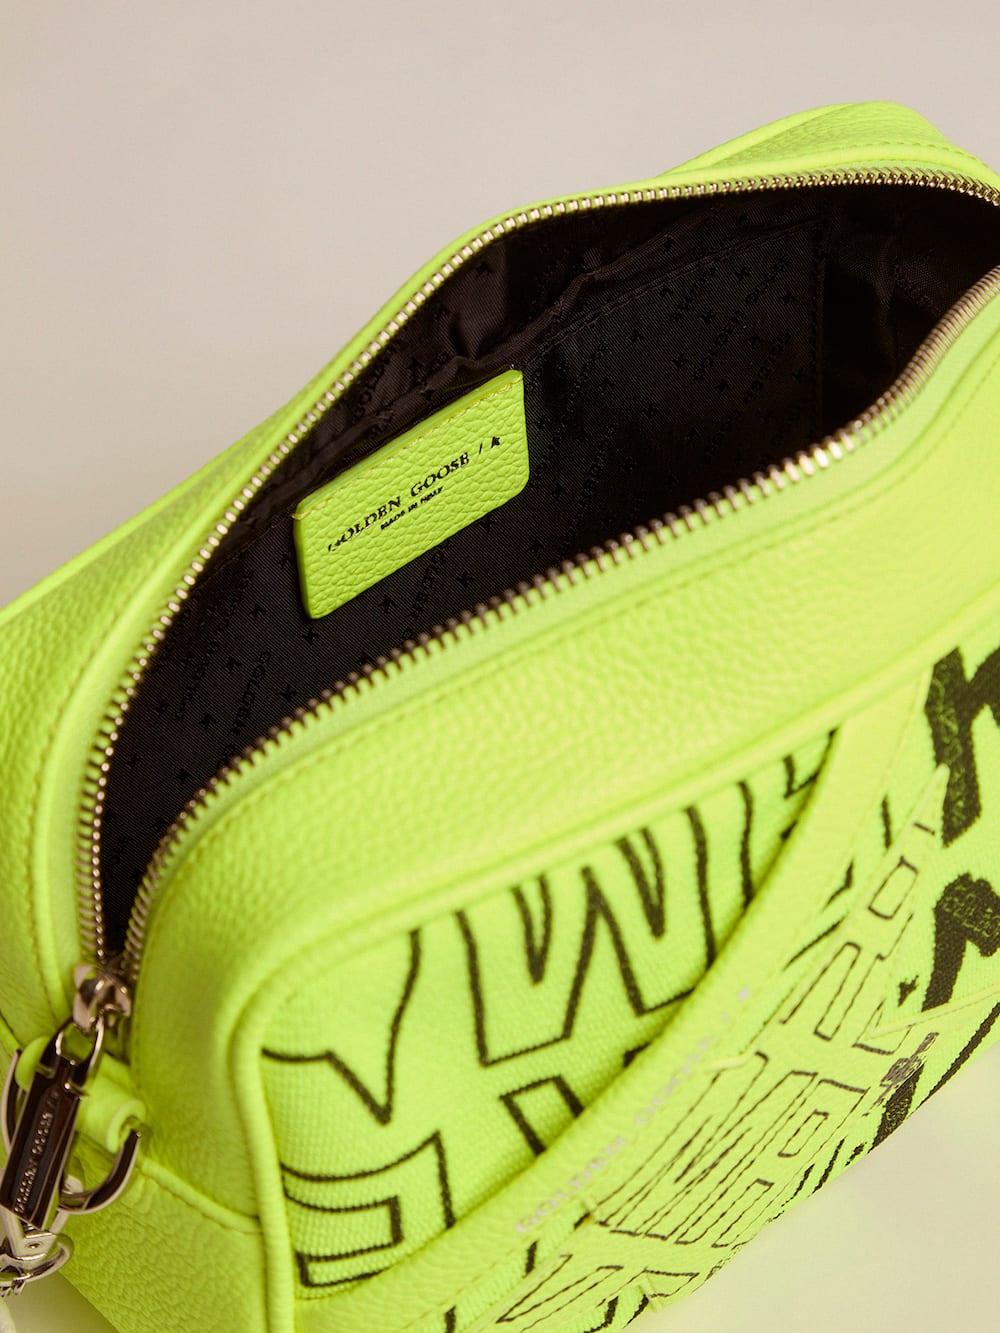 Golden Goose - Borsa Star Bag giallo fluo in canvas con stampa Sneakers Maker in 